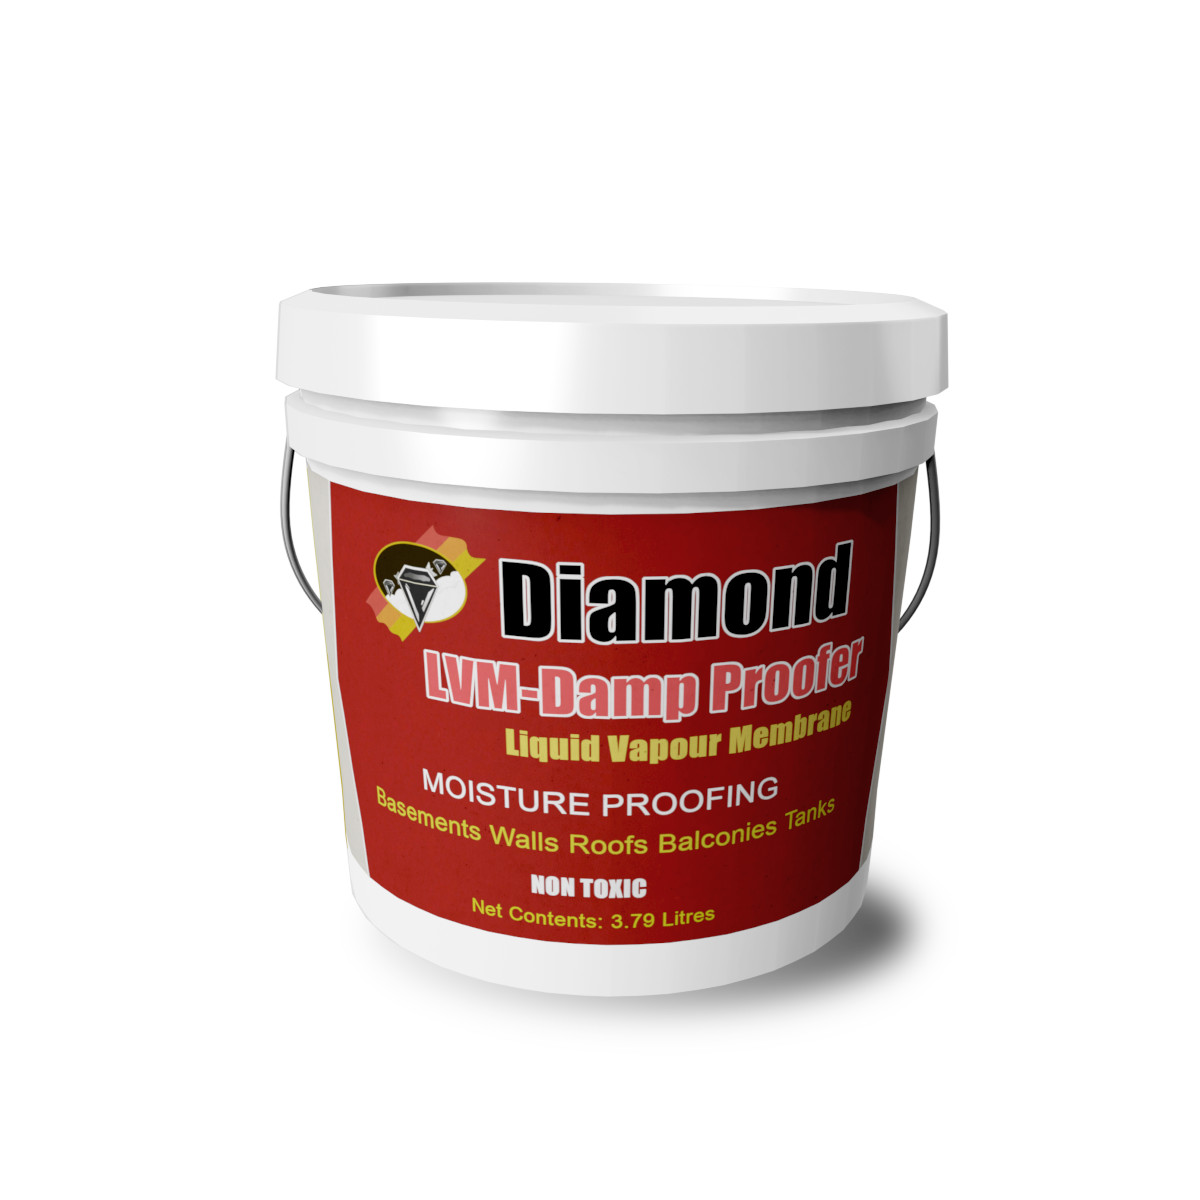 Diamond Waterproofing Compound